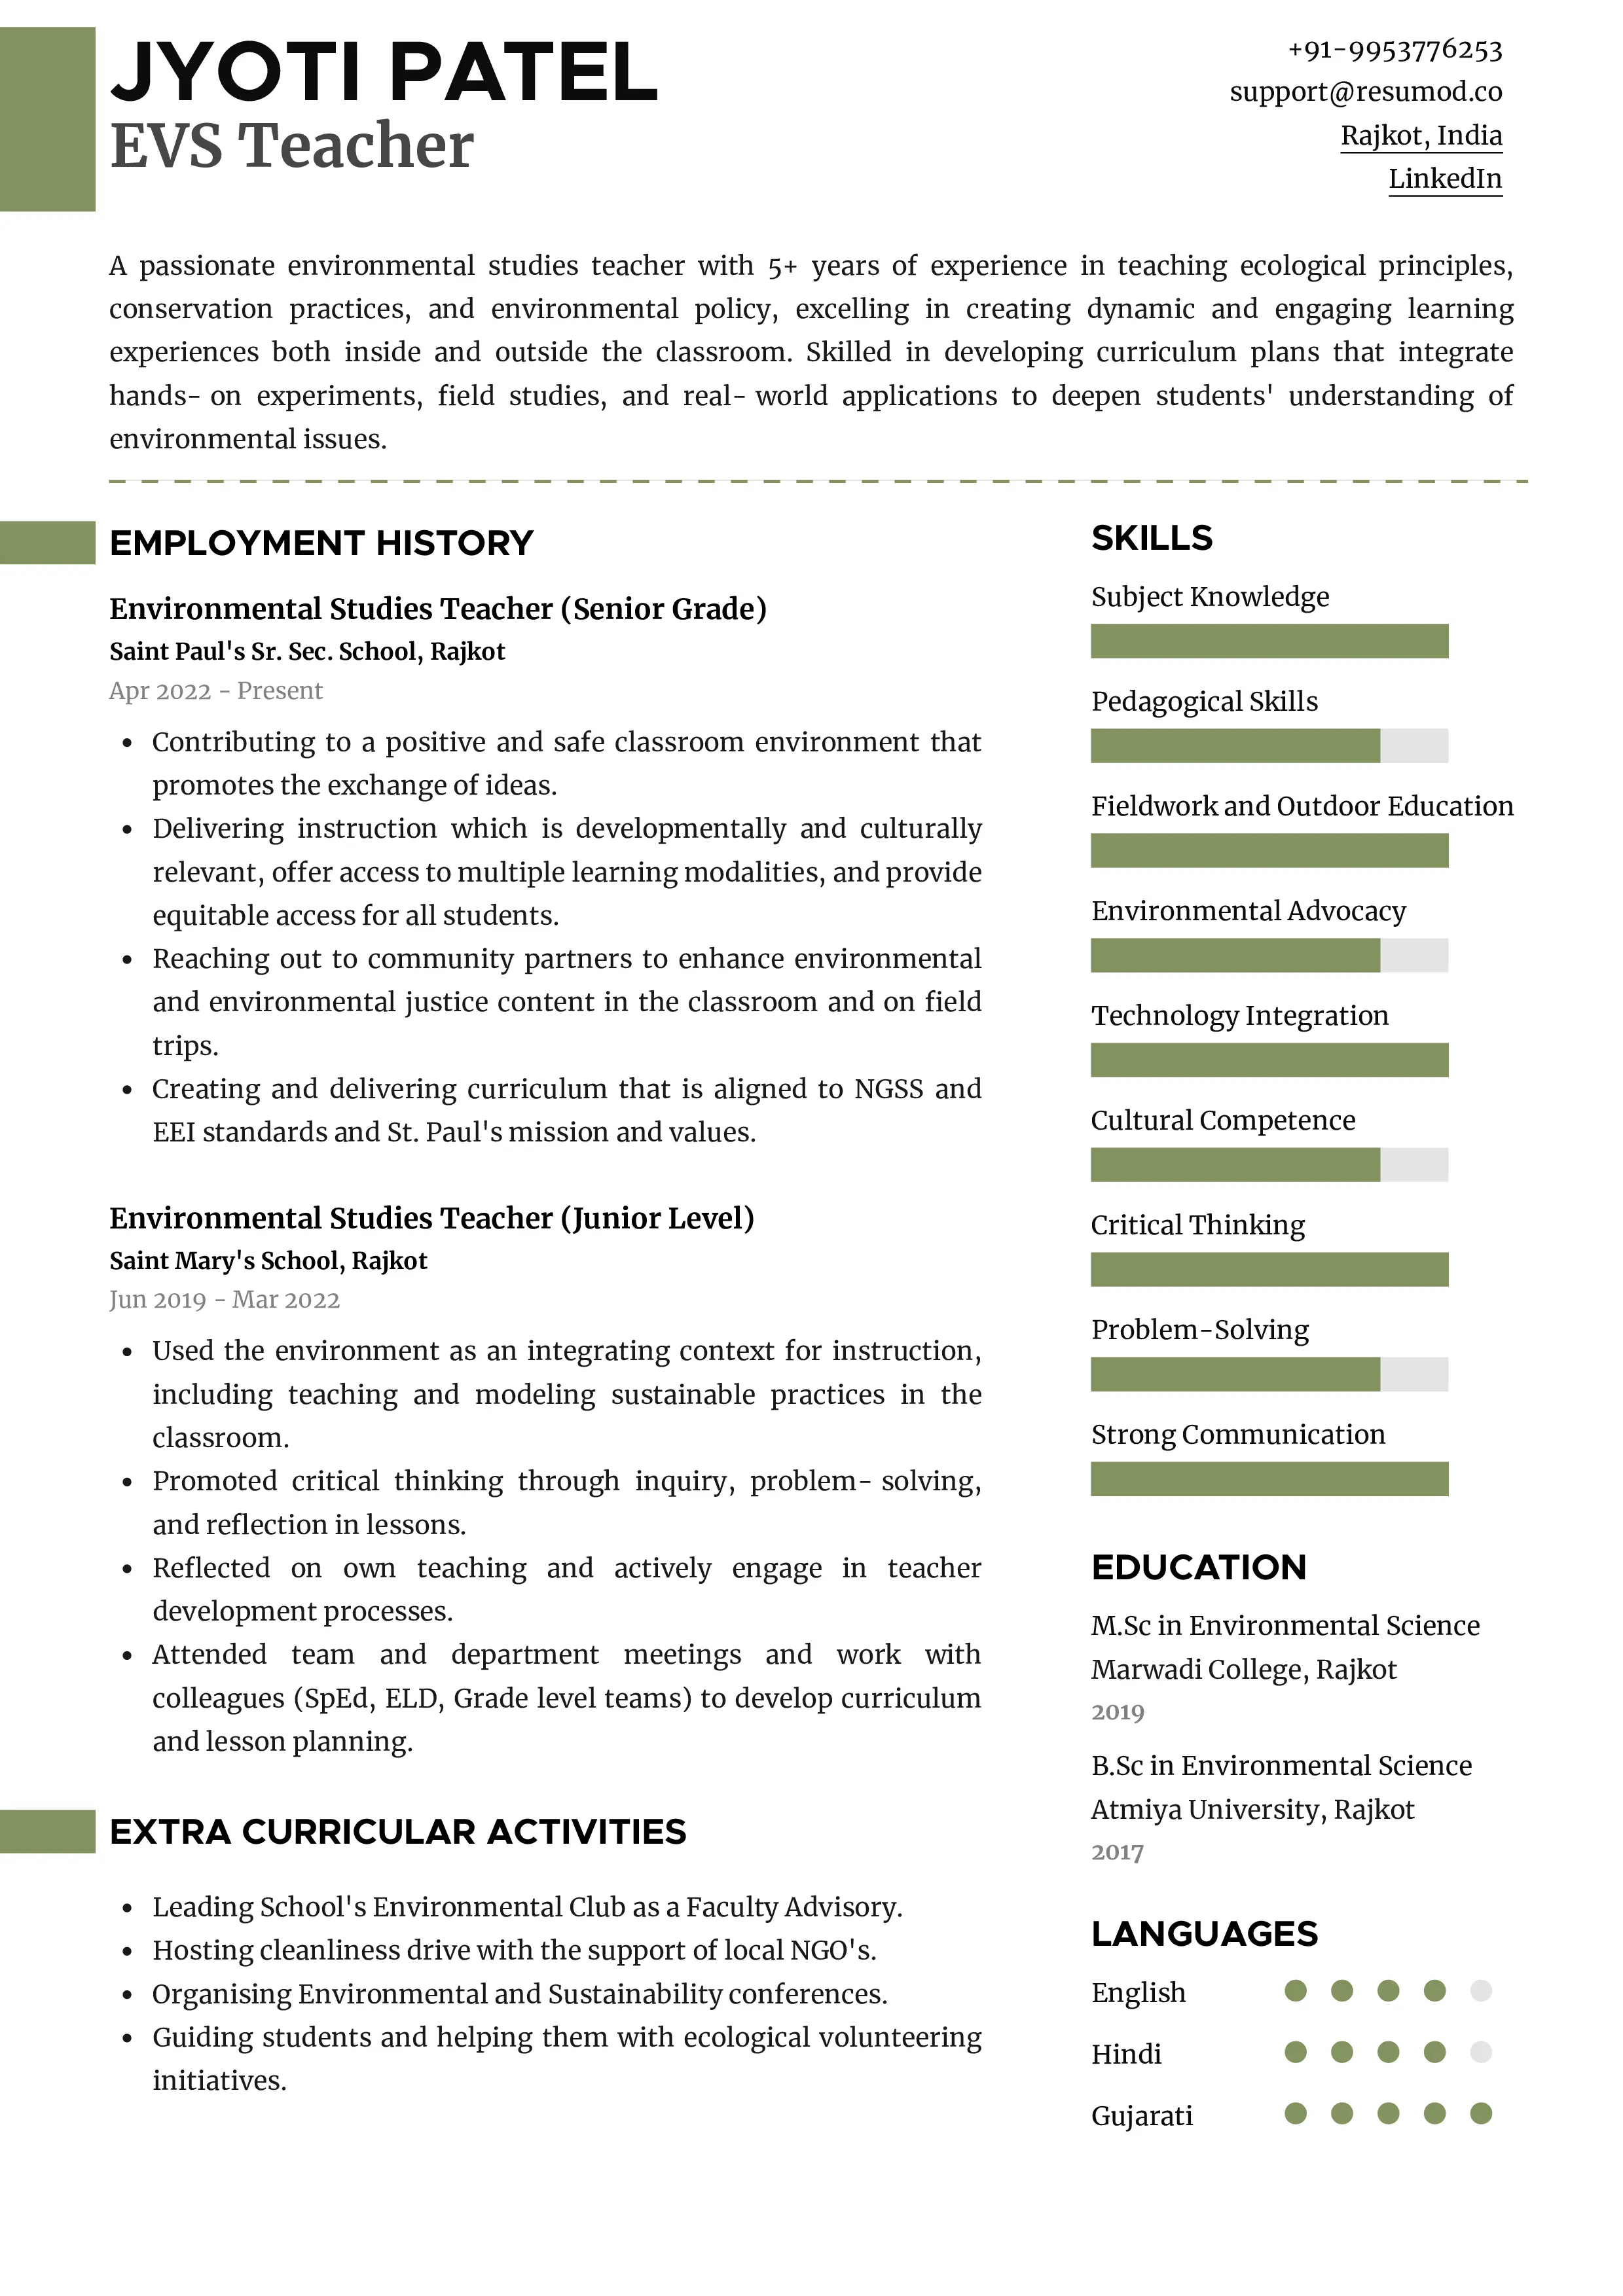 Sample Resume of EVS Teacher | Free Resume Templates & Samples on Resumod.co